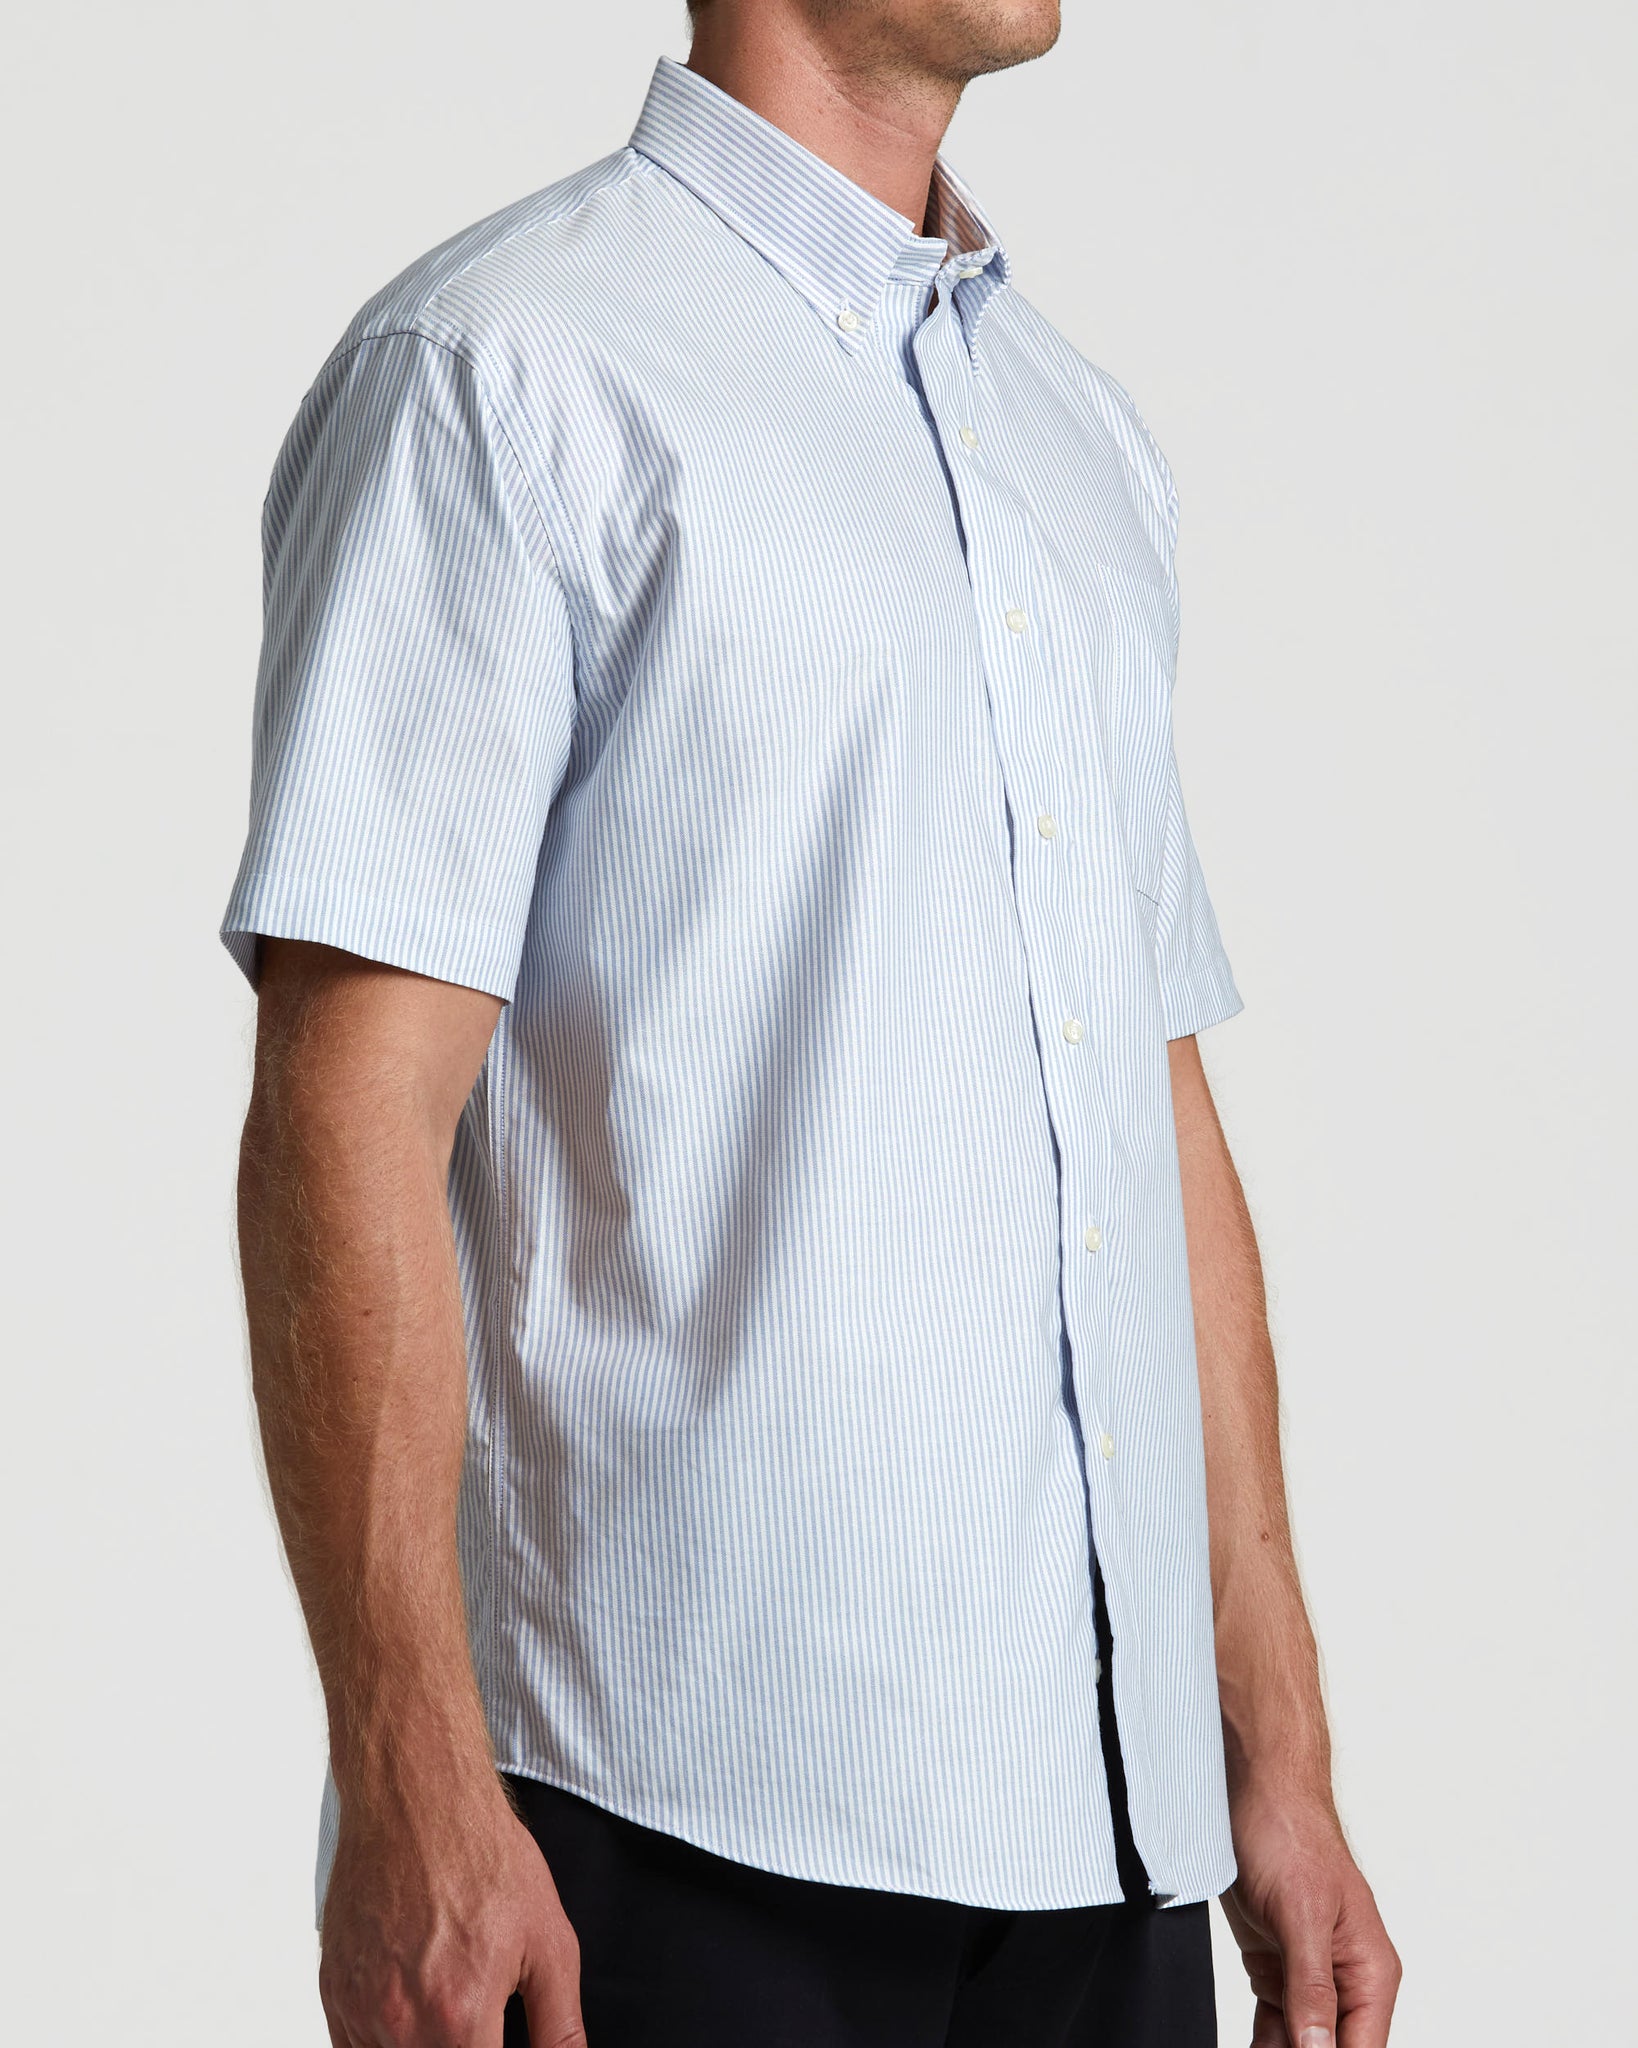 MagnaClick Short Sleeve Stripe Shirt (Mens)